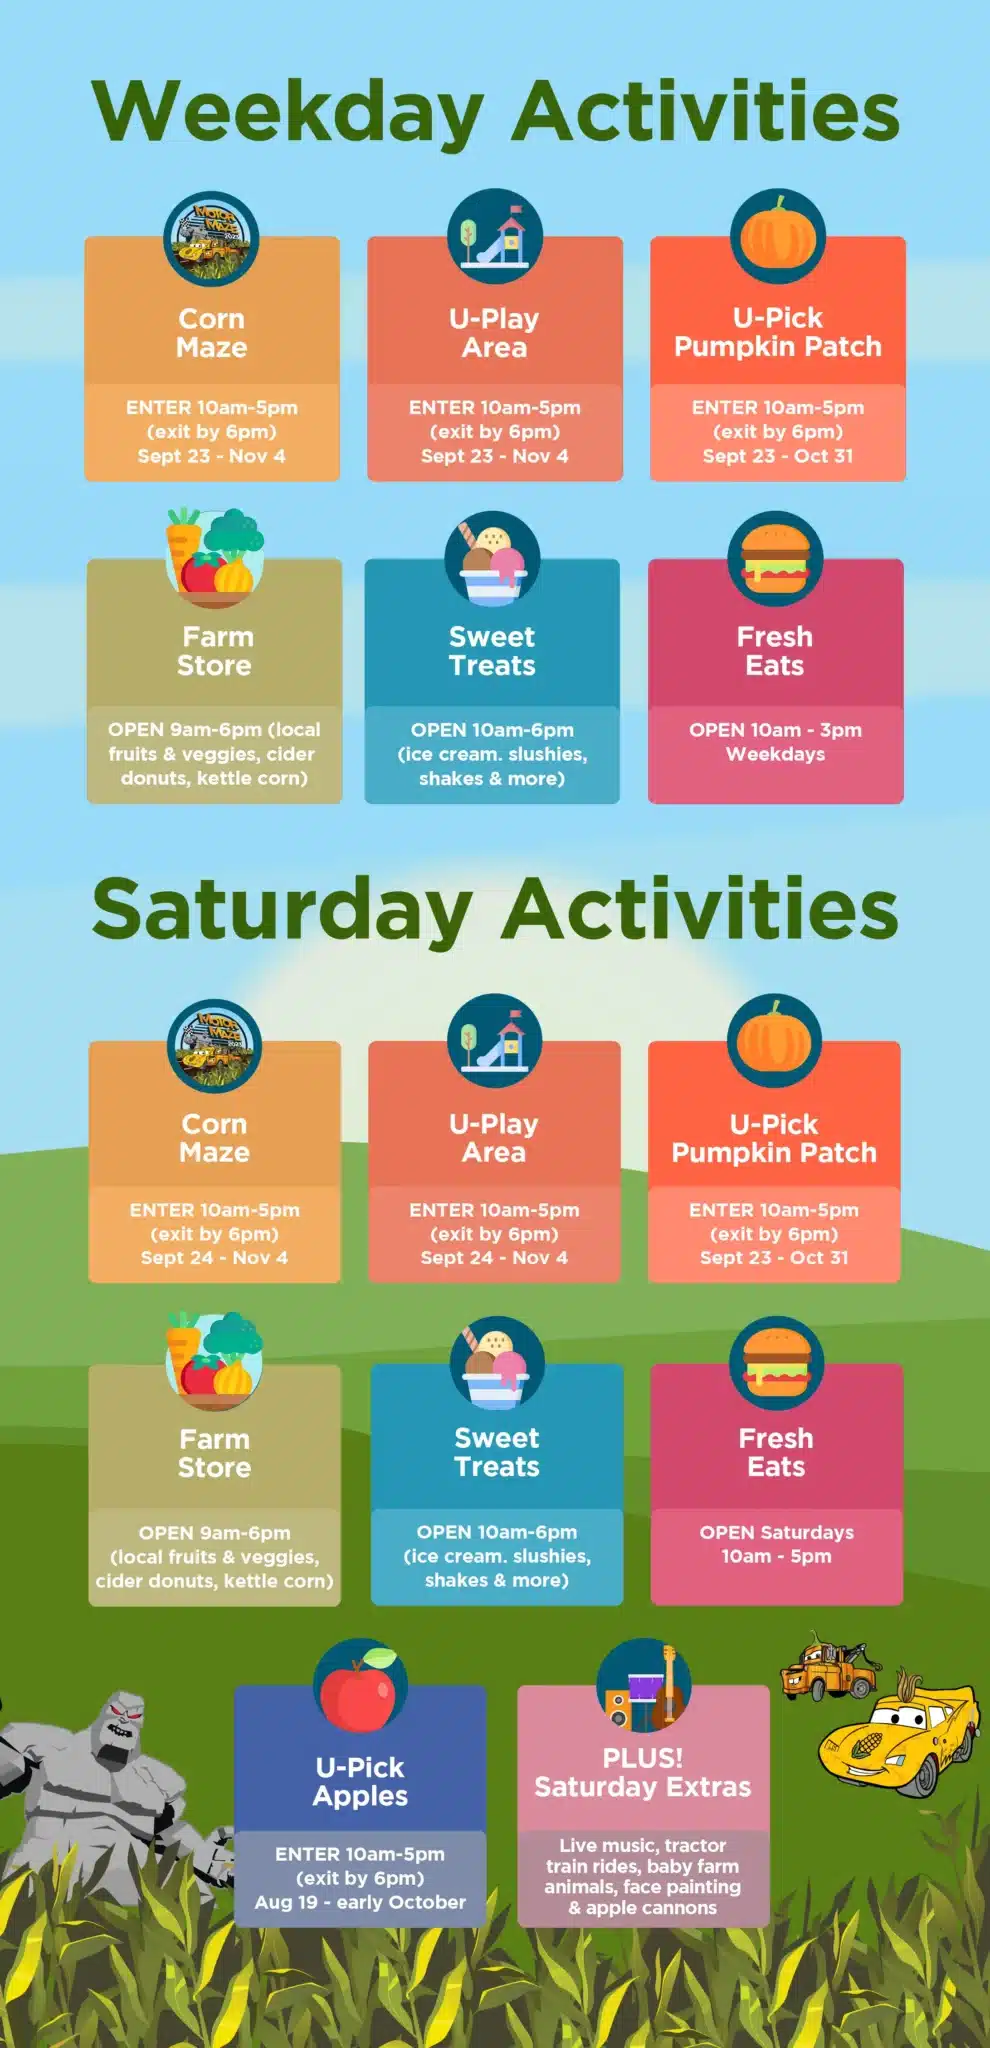 Weekday Saturday Activities